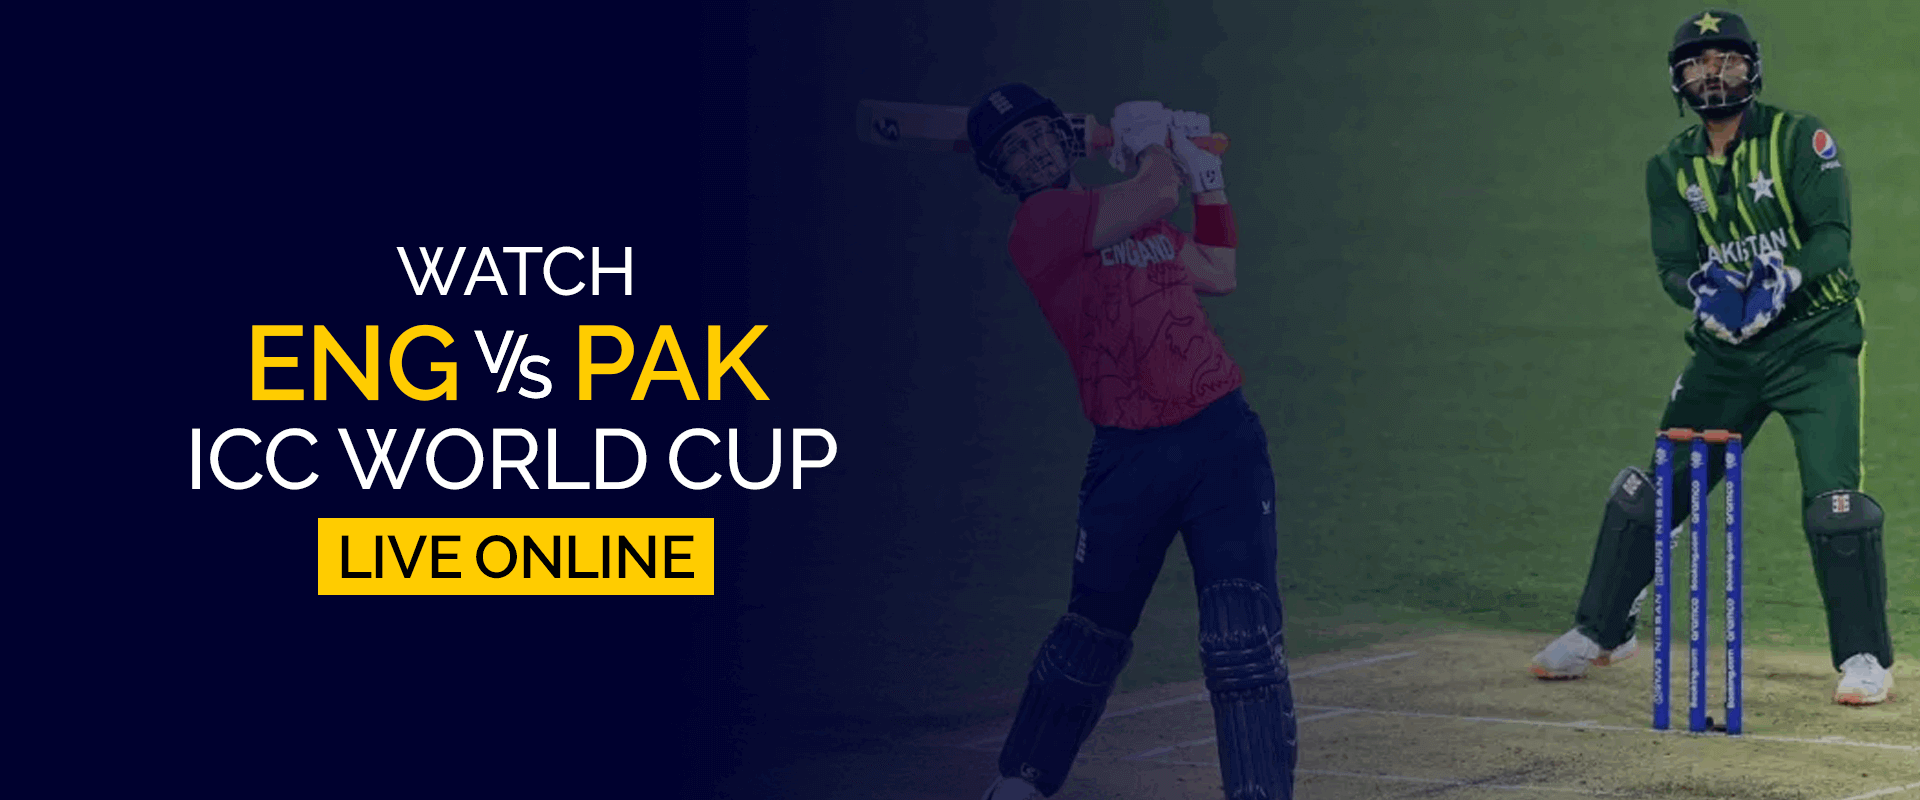 Watch England Vs Pakistan ICC World Cup Live Online